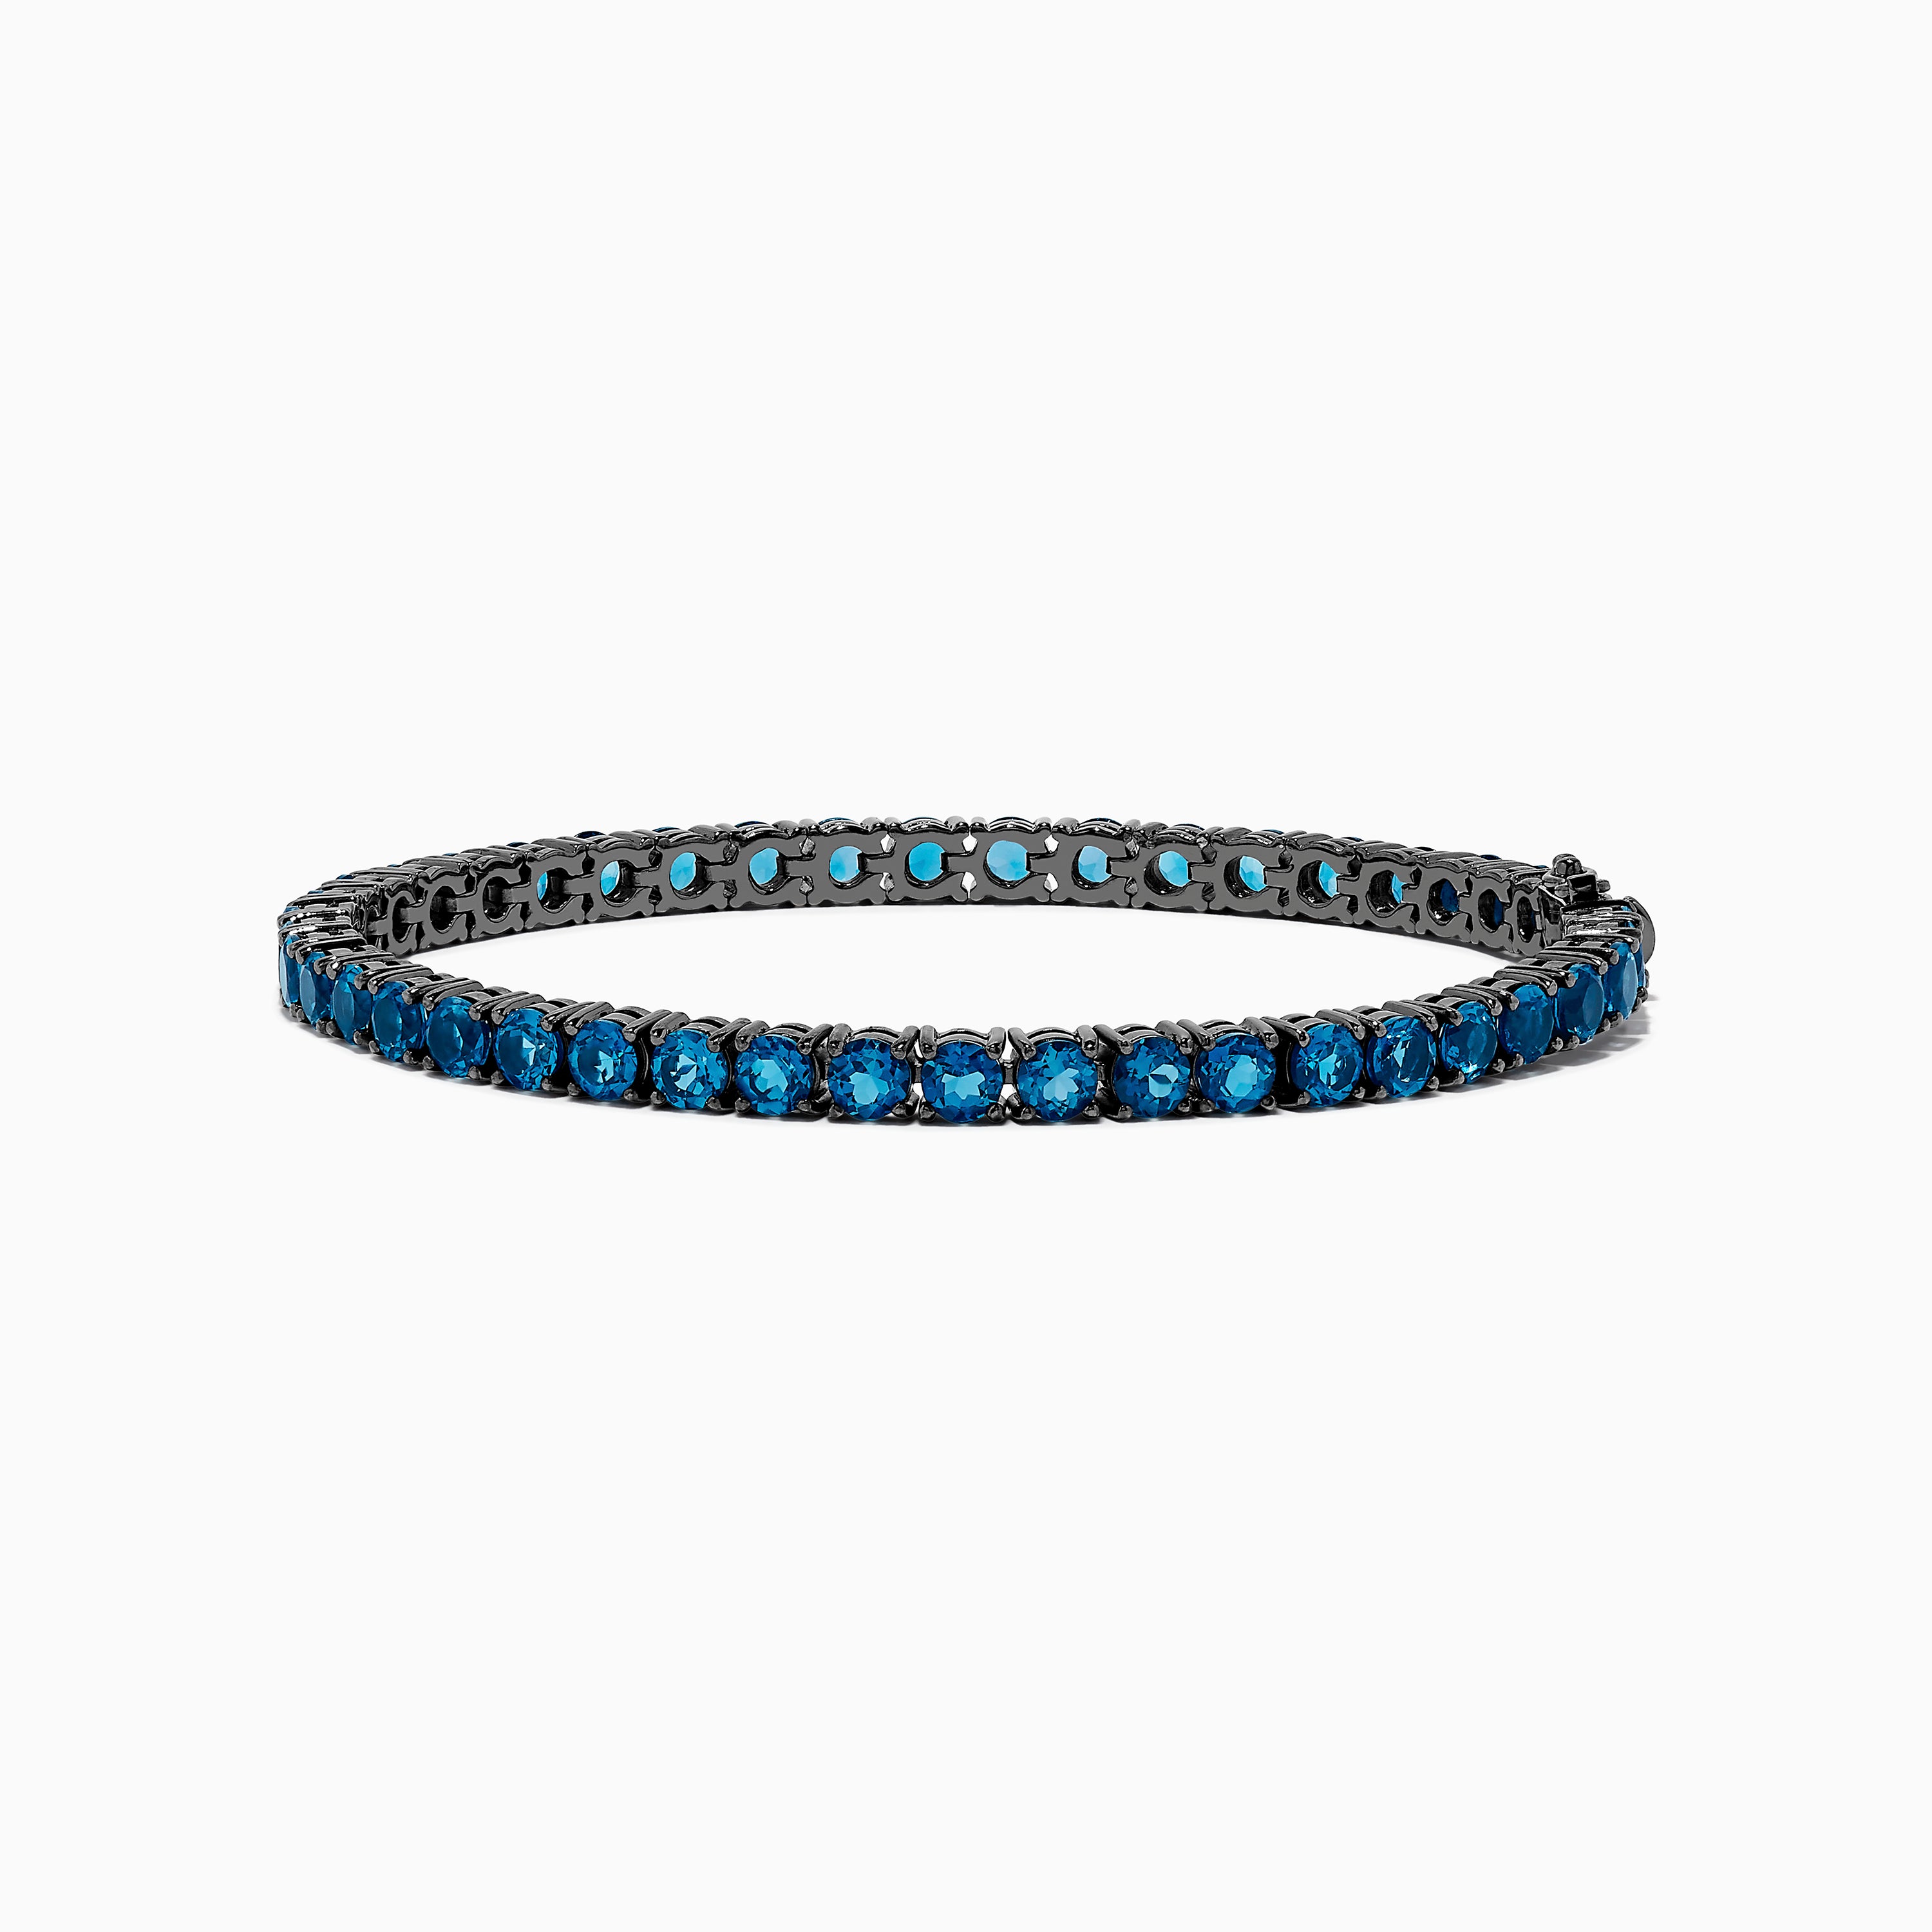 Buy Concave Blue Topaz Bracelet, Pave Diamond Jewelry, Gemstone Diamond  Bracelet, Multi Gemstone Jewelry, 925 Silver Gold Vermeil Bracelet Gift  Online in India - Etsy